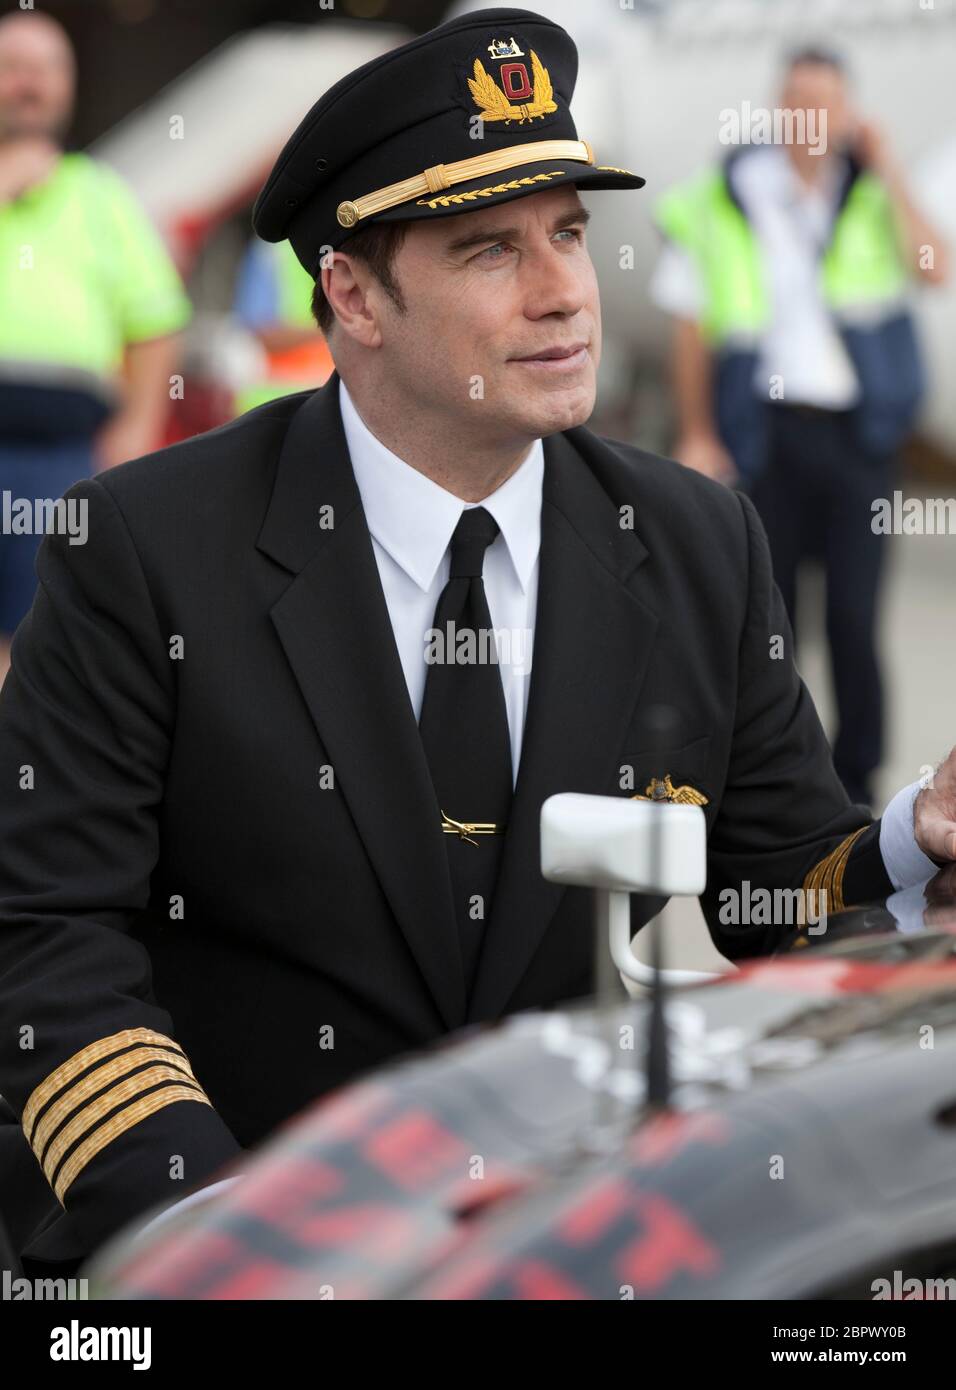 John Travolta wearing Qantas pilot's uniform, Melbourne airport, 2010. Stock Photo